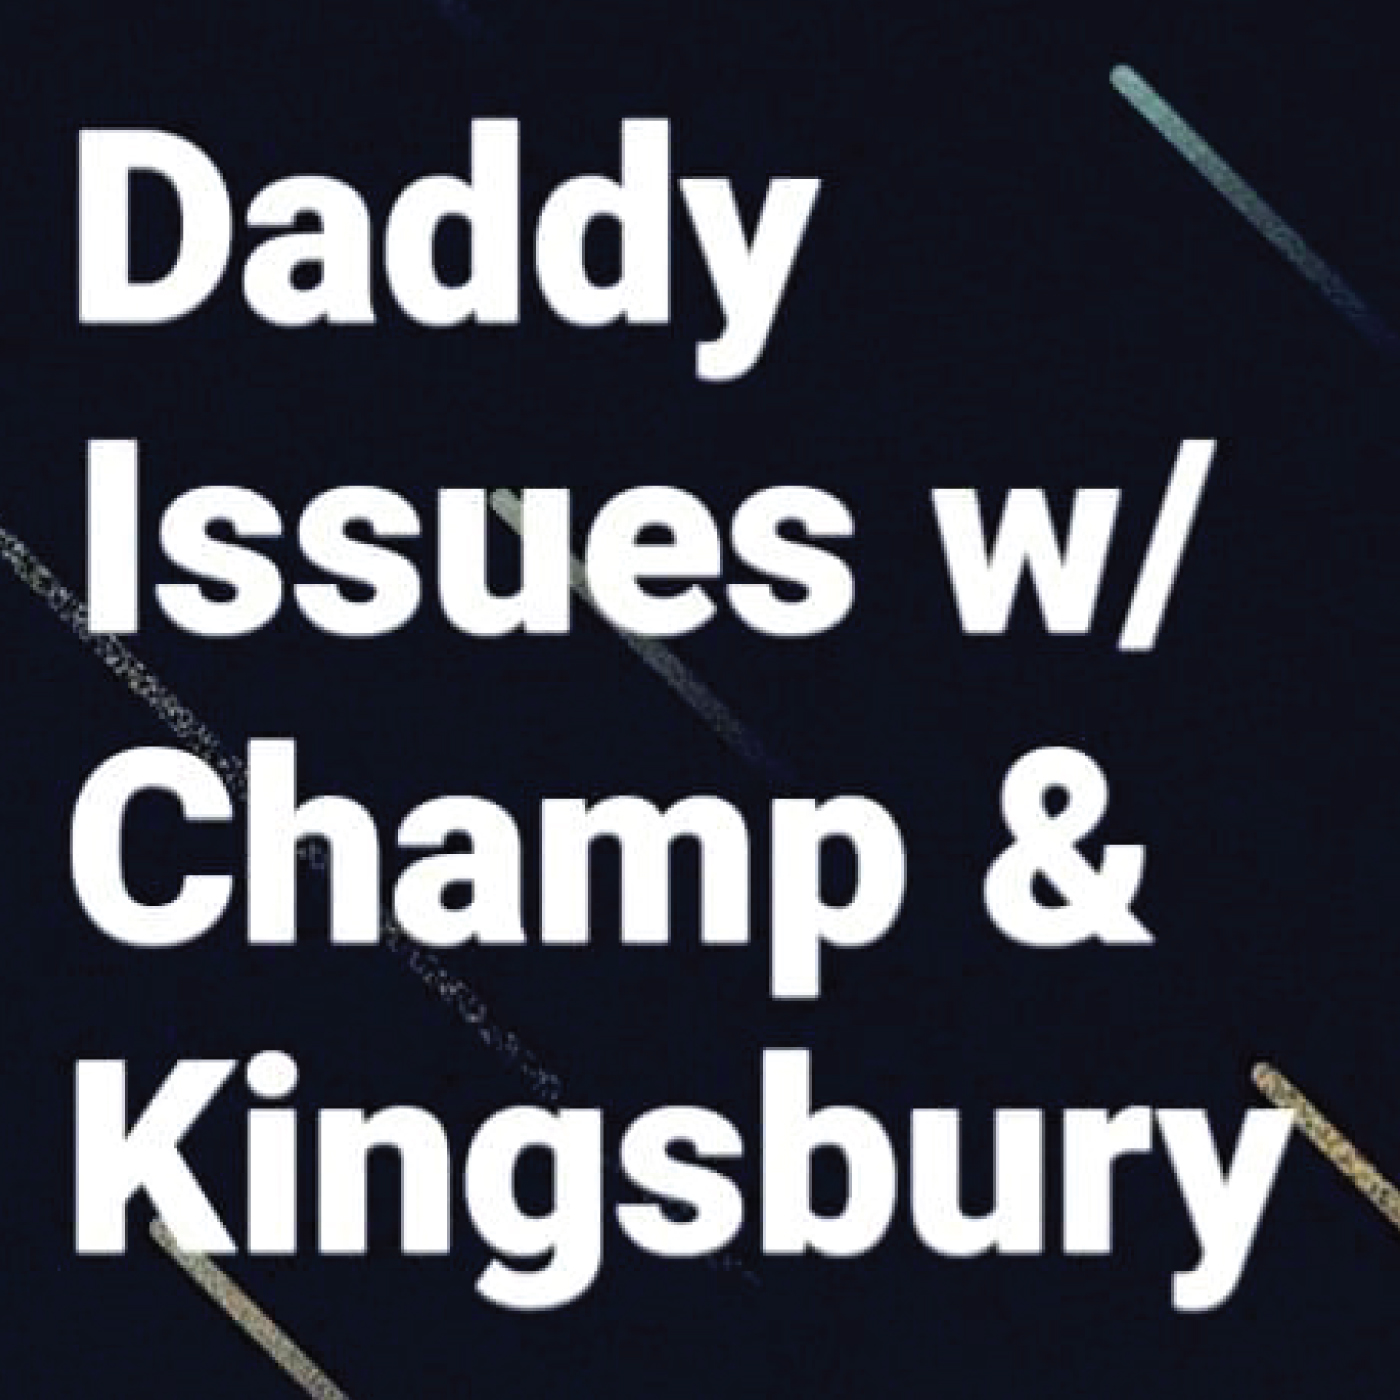 Daddy Issues w/ Champ & Kingsbury